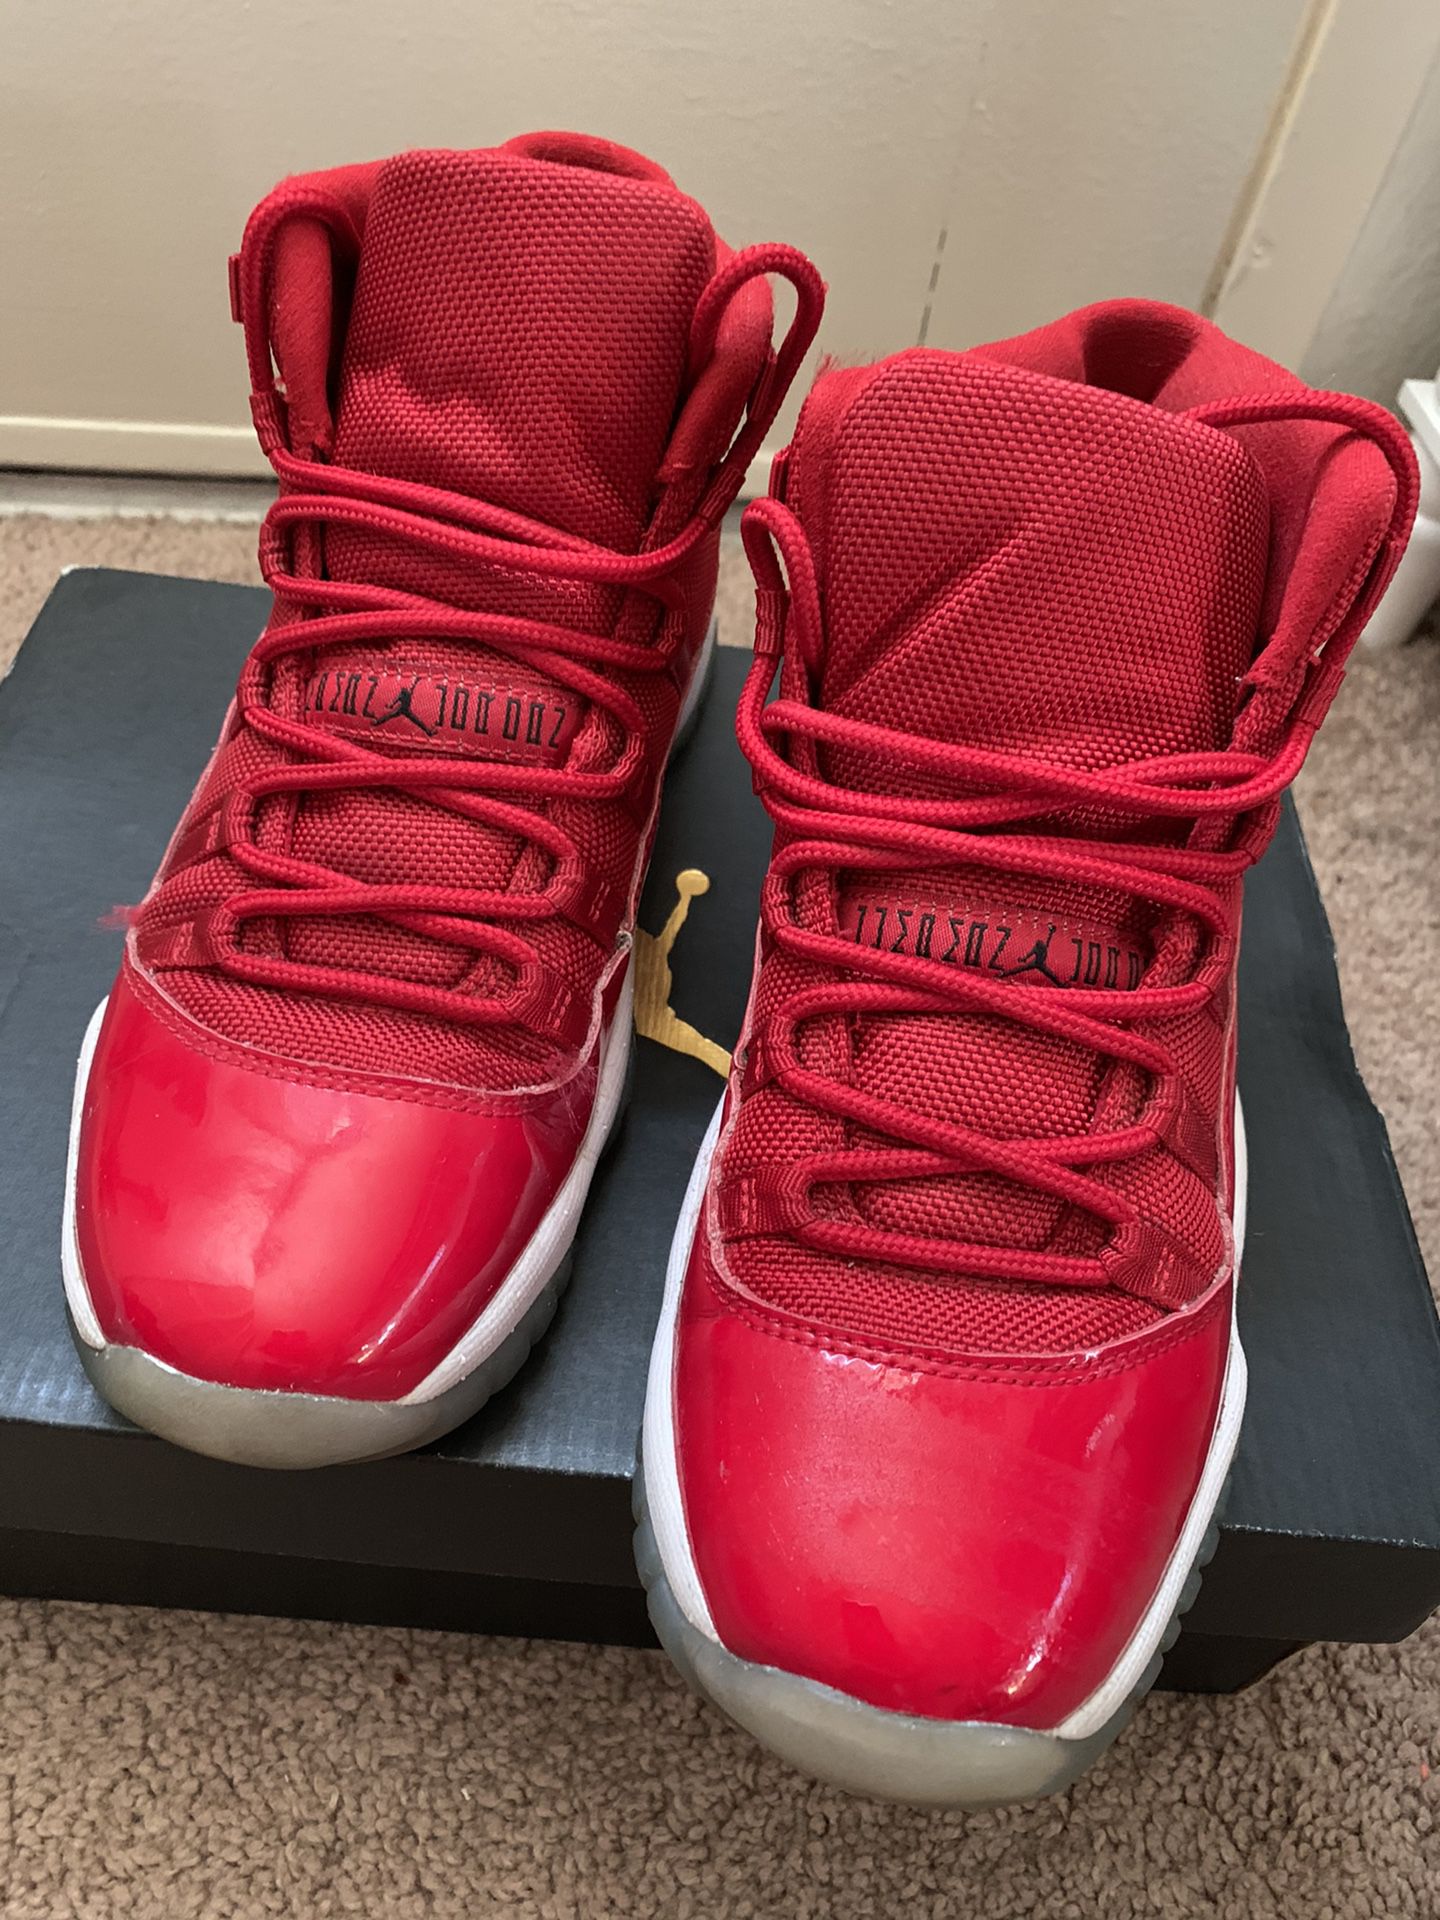 Jordan 11 Gym Red 96’ Size 4y